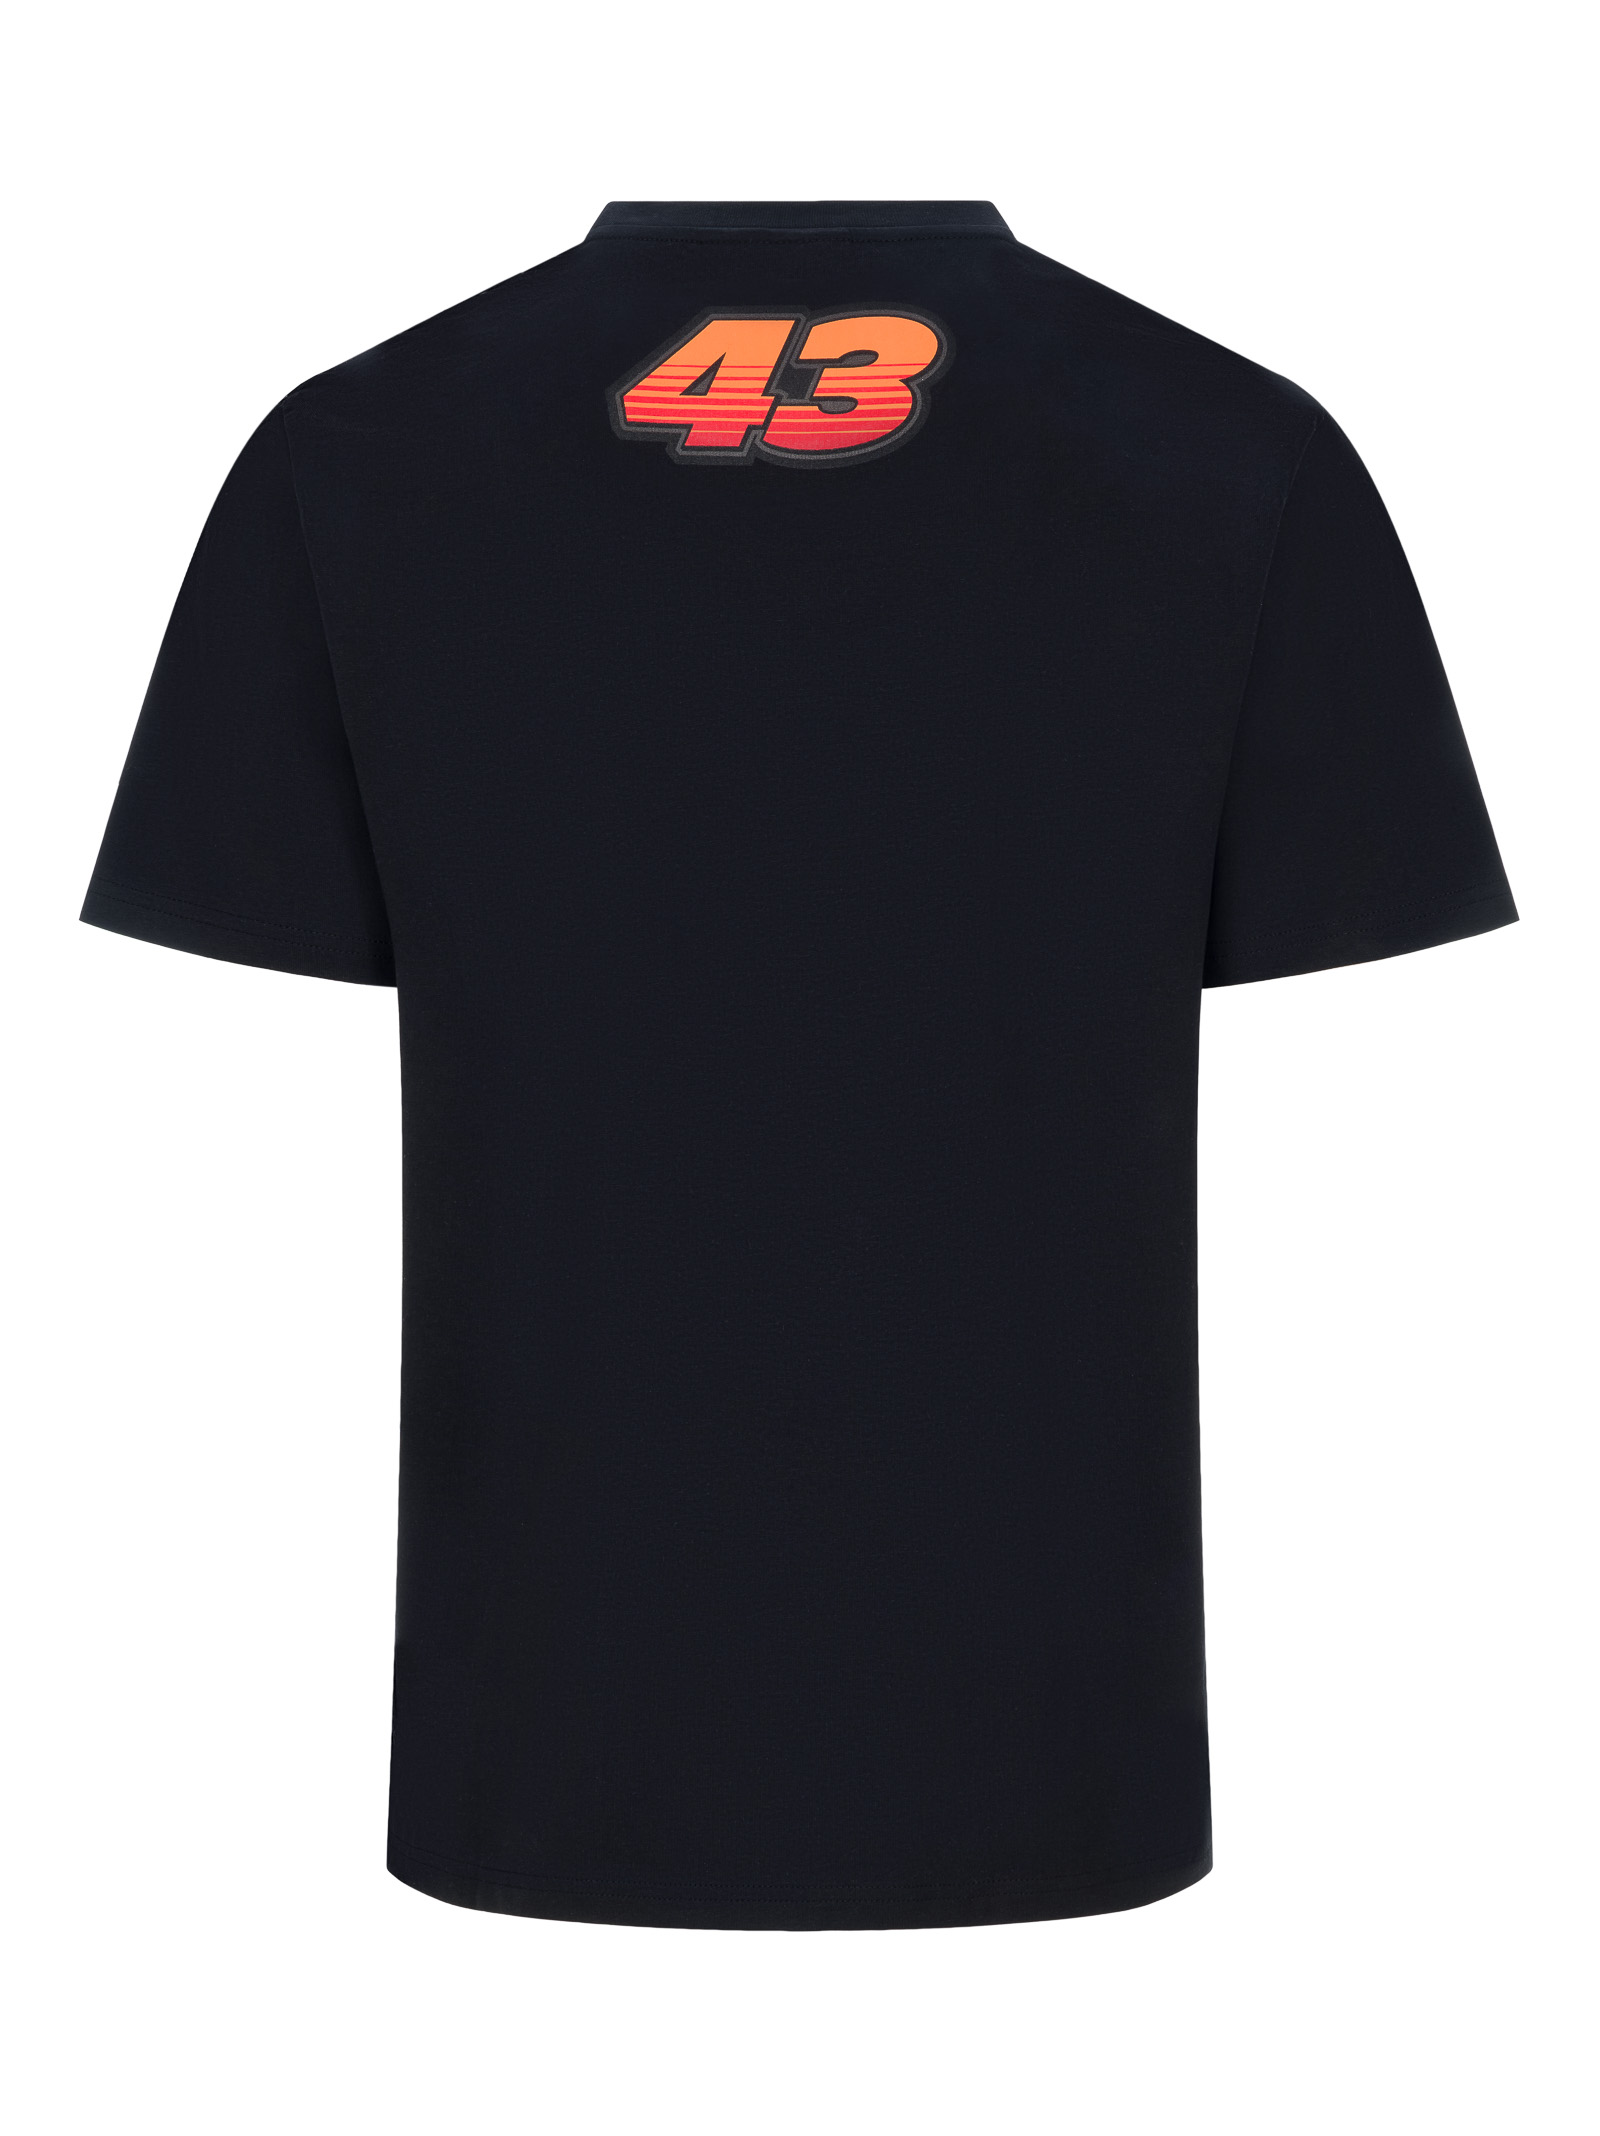 Jack Miller Black T-shirt - XXL Racing